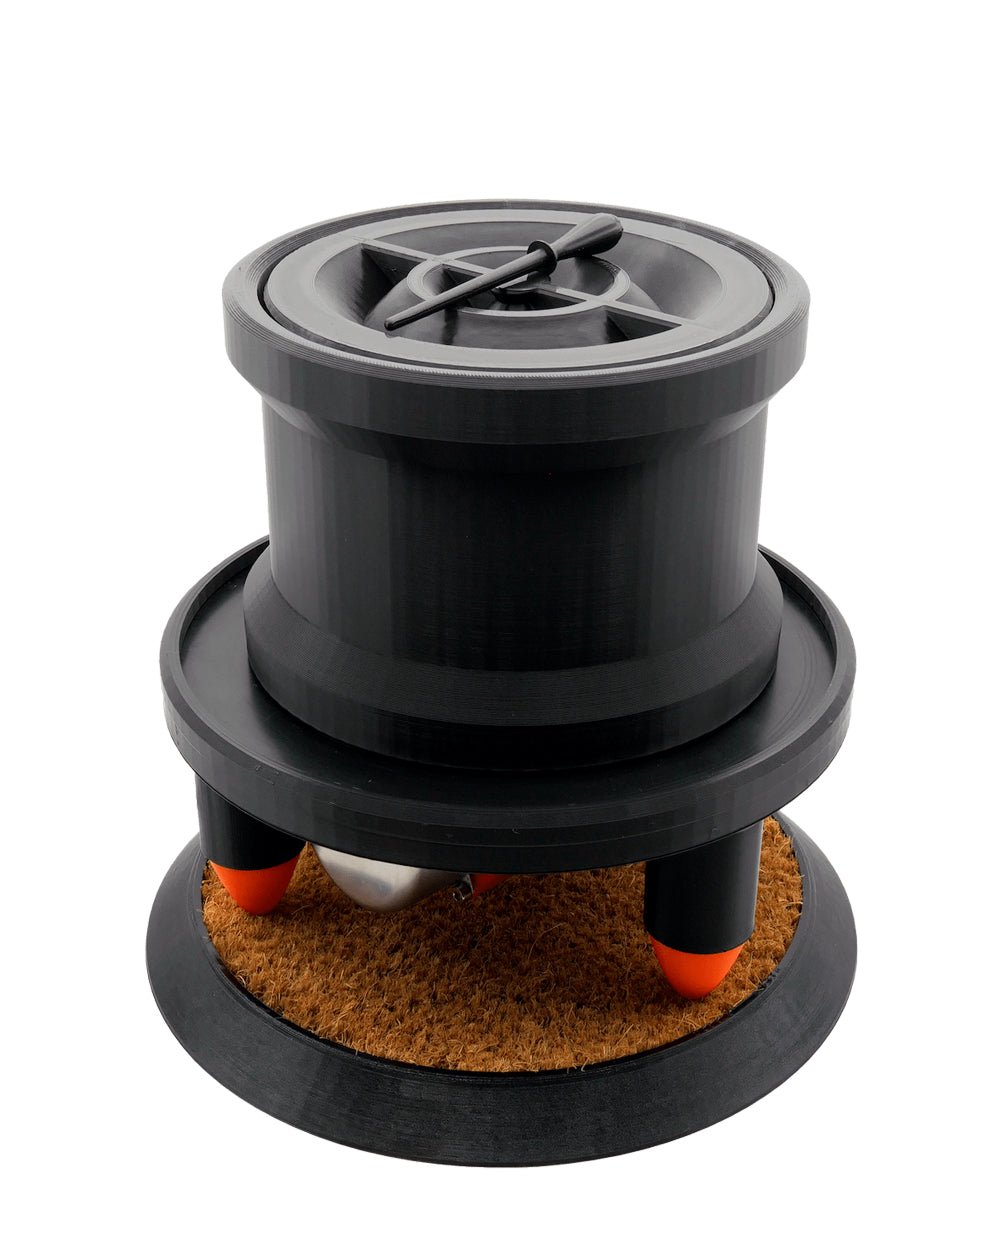 HUMBOLDT | Black Pre-Rolled Cones Filling Machine Starter Kit 109mm | Fill 121 Cones Per Run - 1